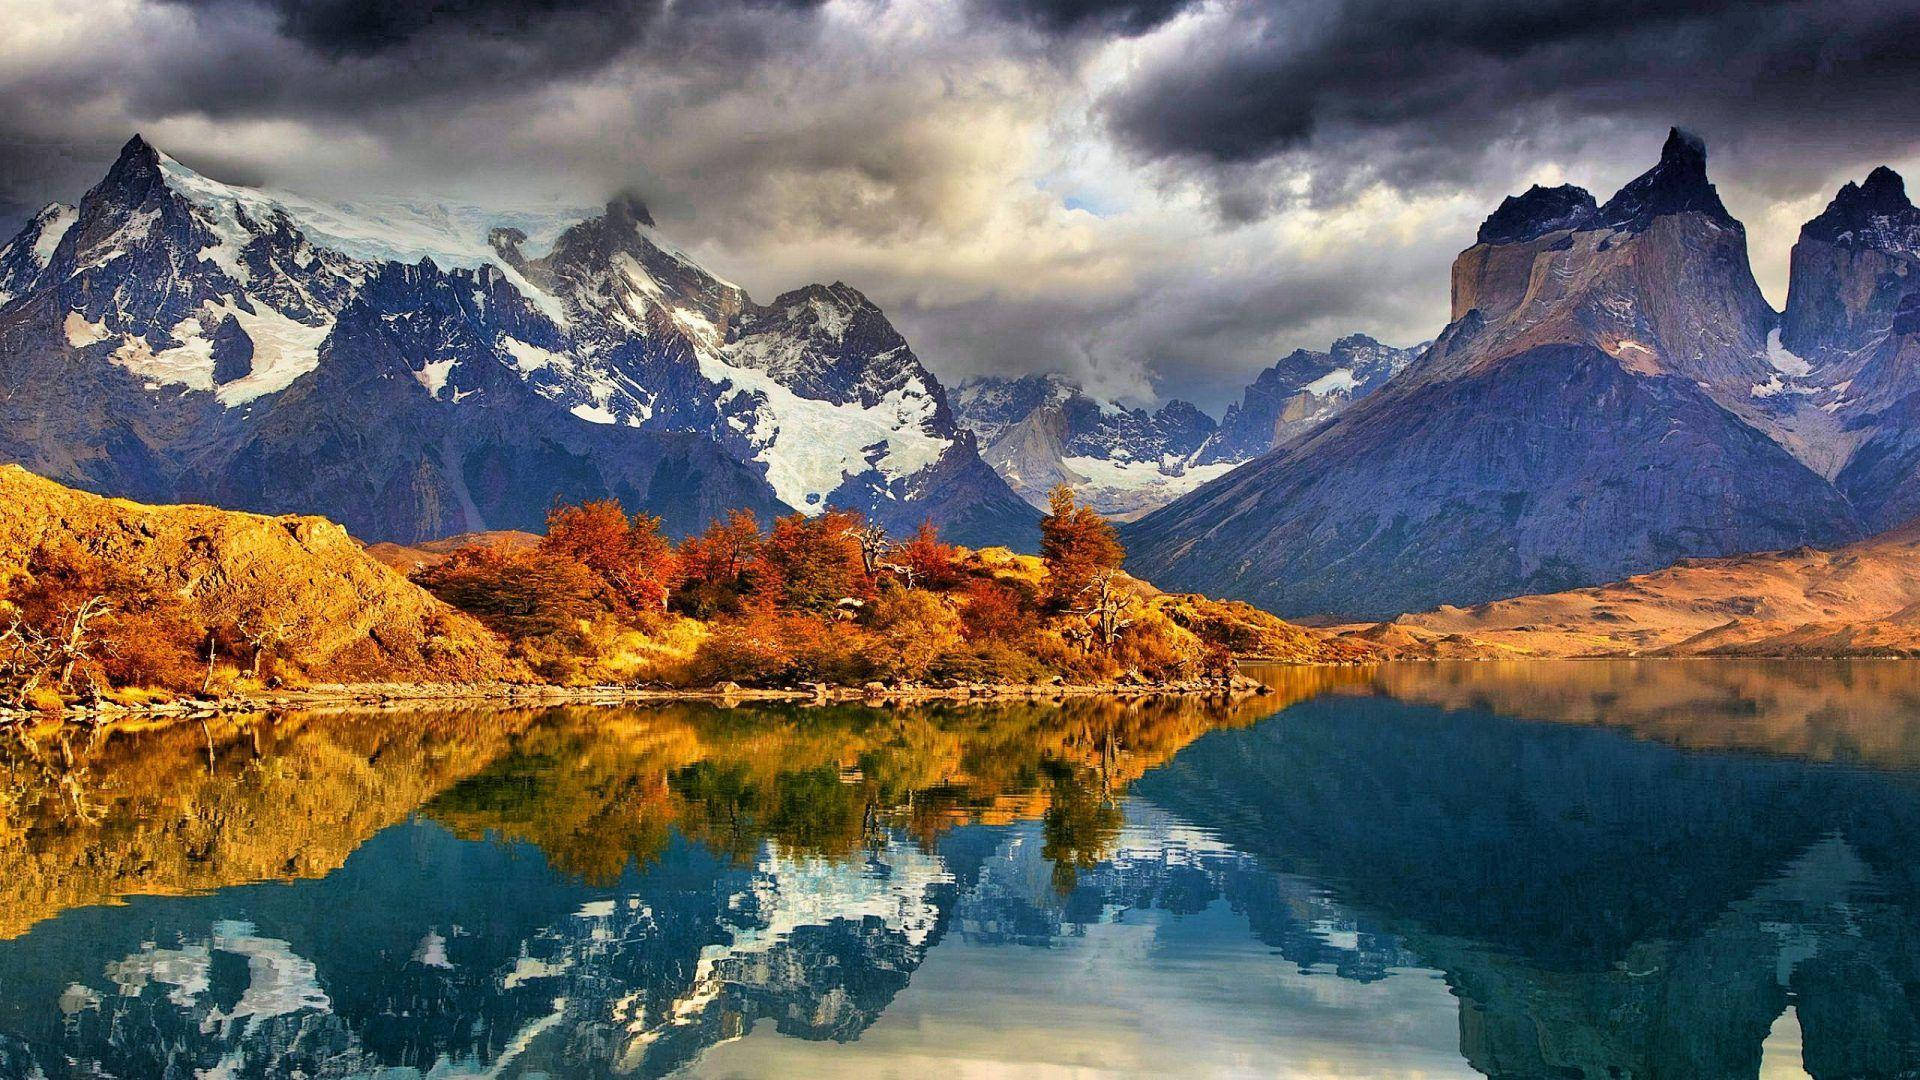 Patagonia Vibrant Landscape Photograph Background